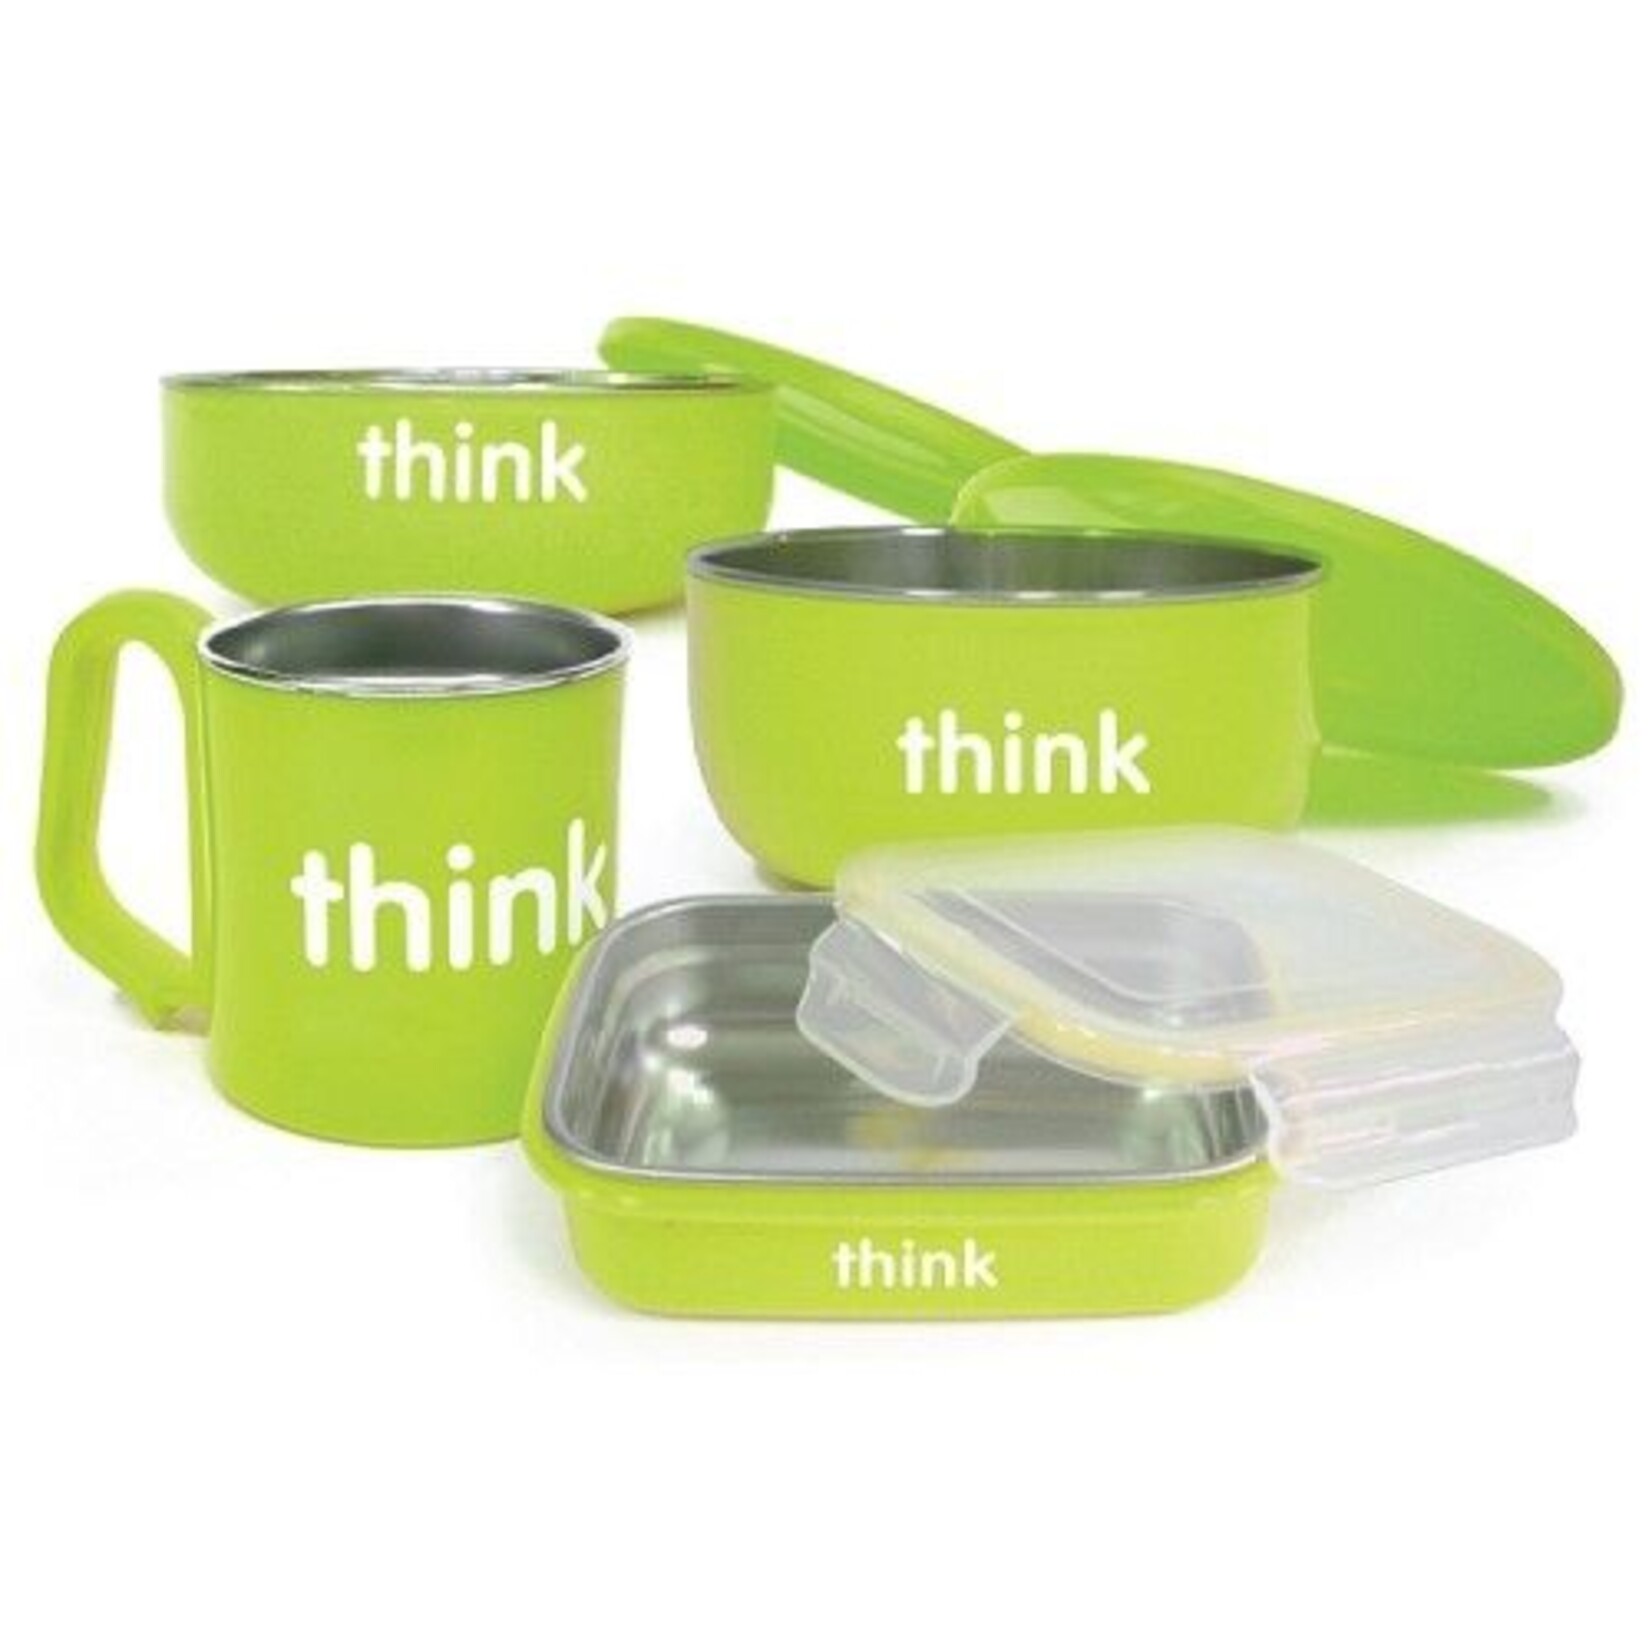 Thinkbaby Thinksport The Complete BPA Free Feeding Set Lt Green